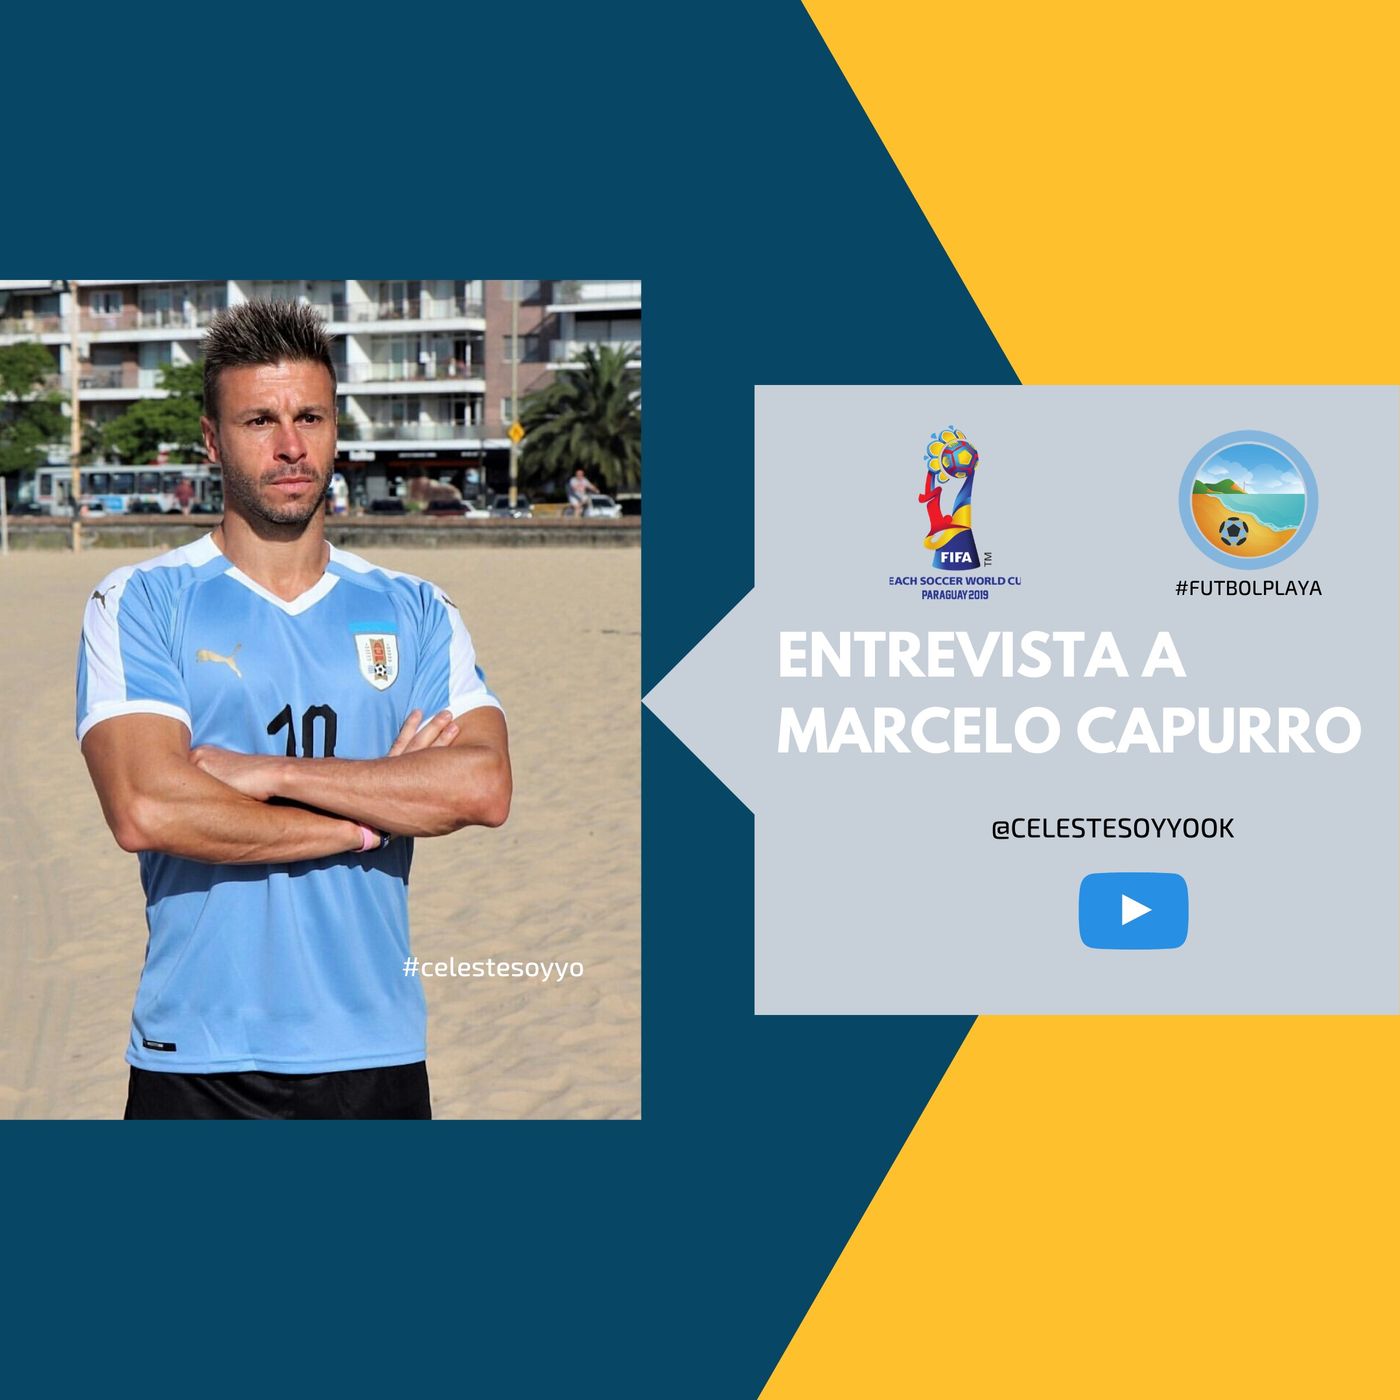 Ep 001 - Entrevista con Marcelo Capurro - Selección uruguaya de Fútbol Playa